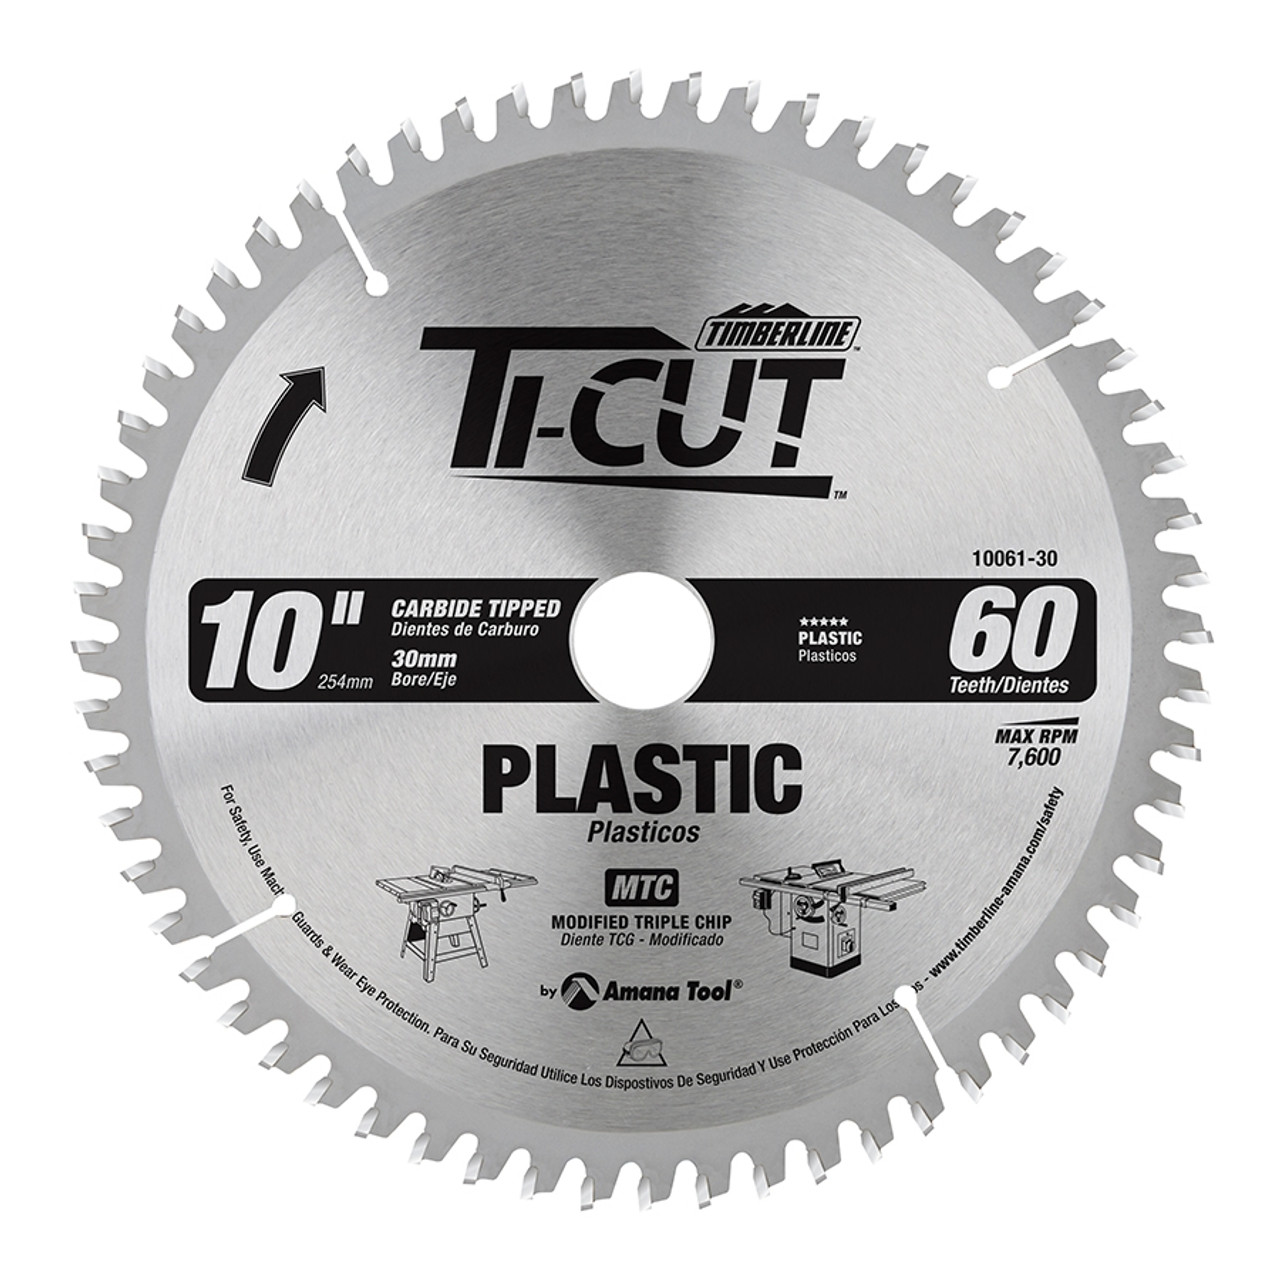 Timberline 10061-30 Carbide Tipped Ti-Cut Plastic 10 Inch D x 60T MTC, -2  Deg, 30MM Bore, Circular Saw Blade